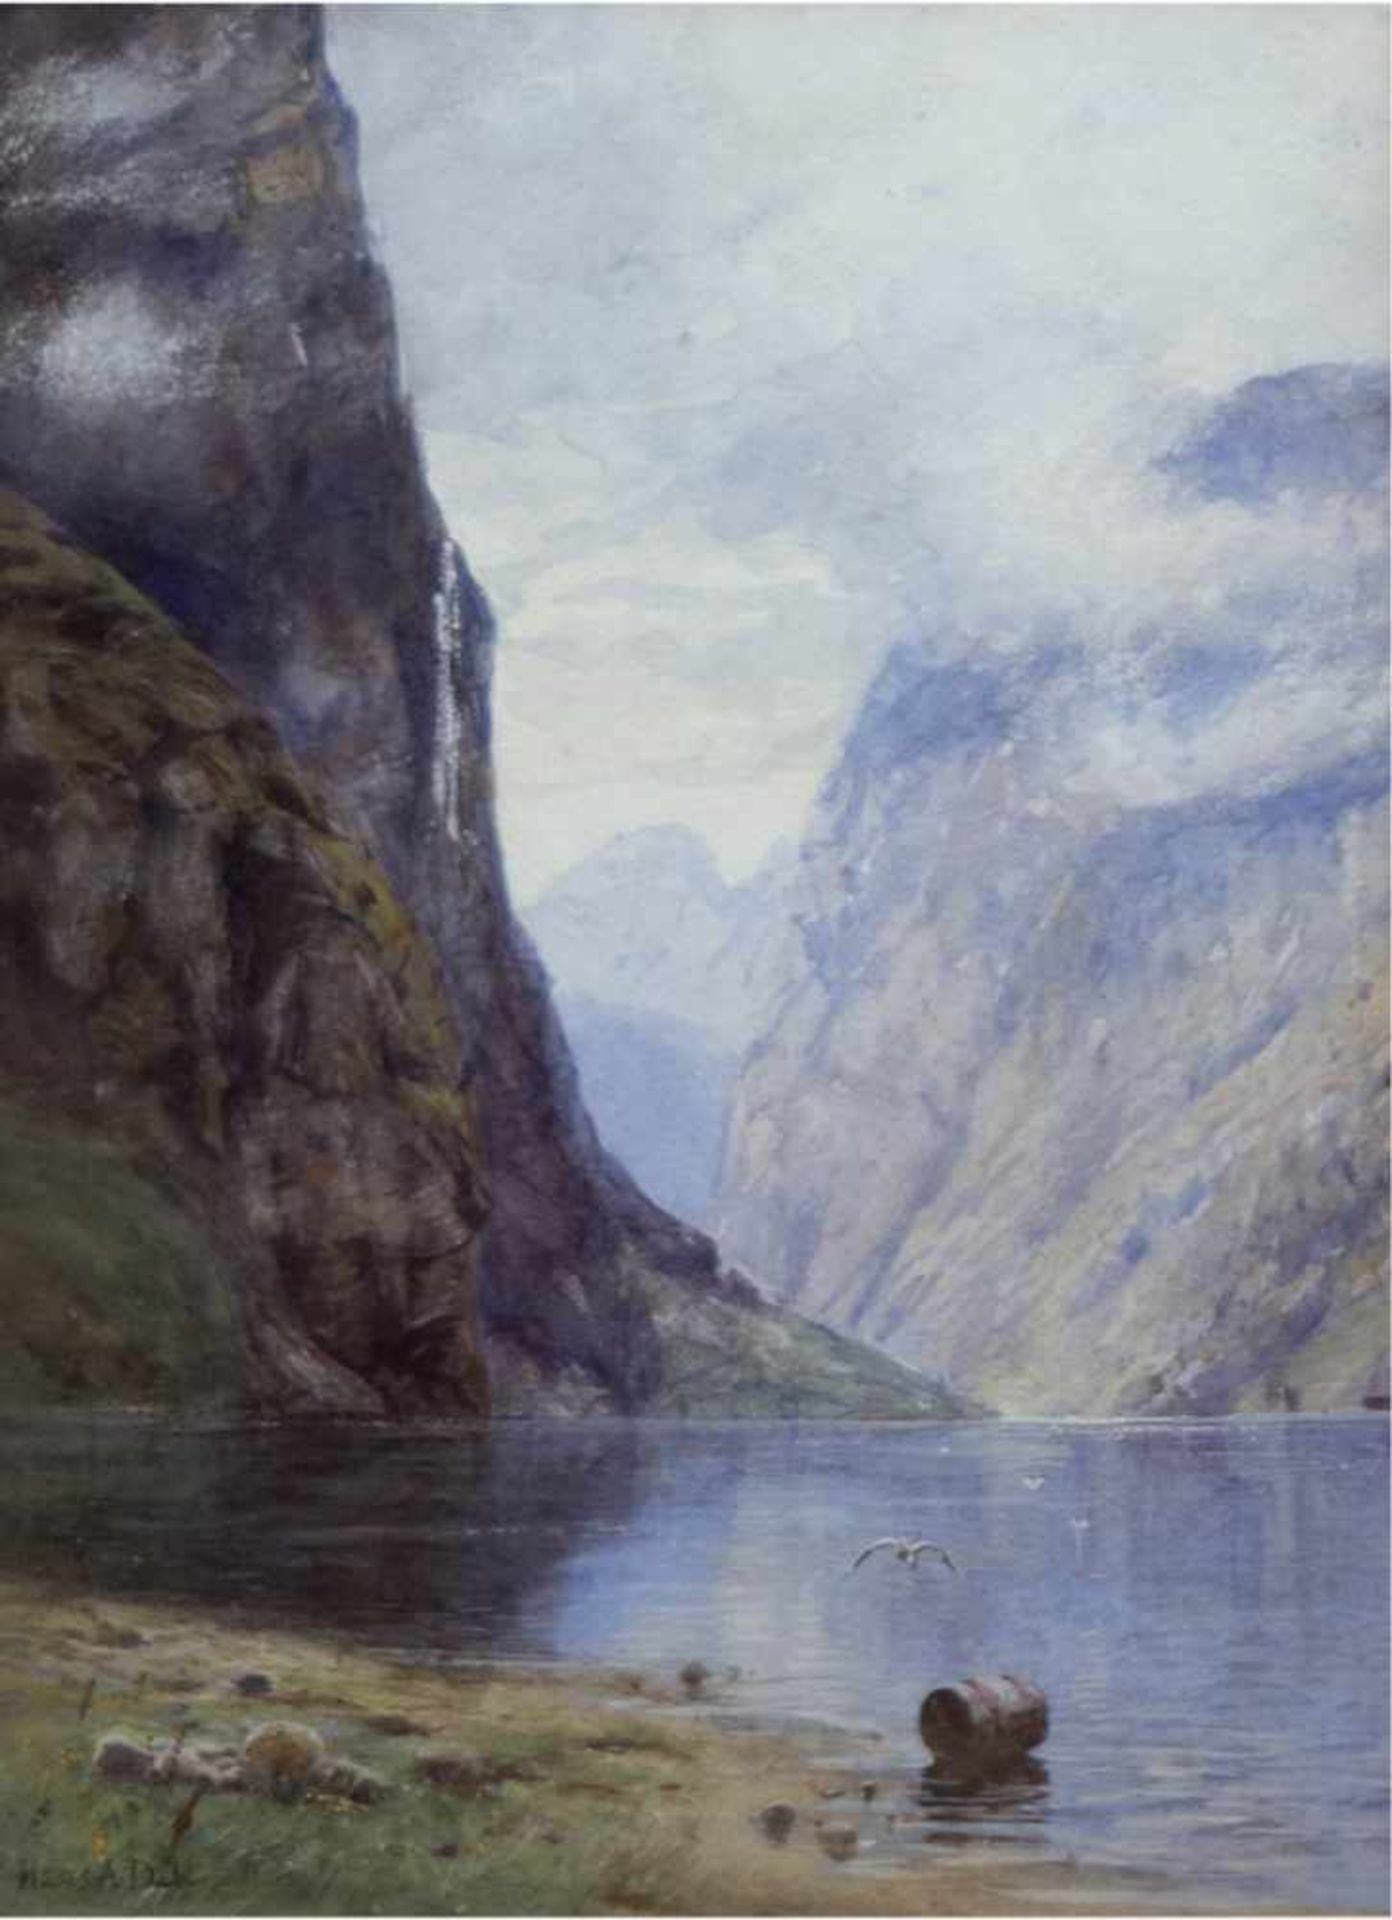 Dahl, Hans Andreas (1881 Düsseldorf- 1919 Christiana, jetzt Oslo) "NorwegischerKönigsfjord",